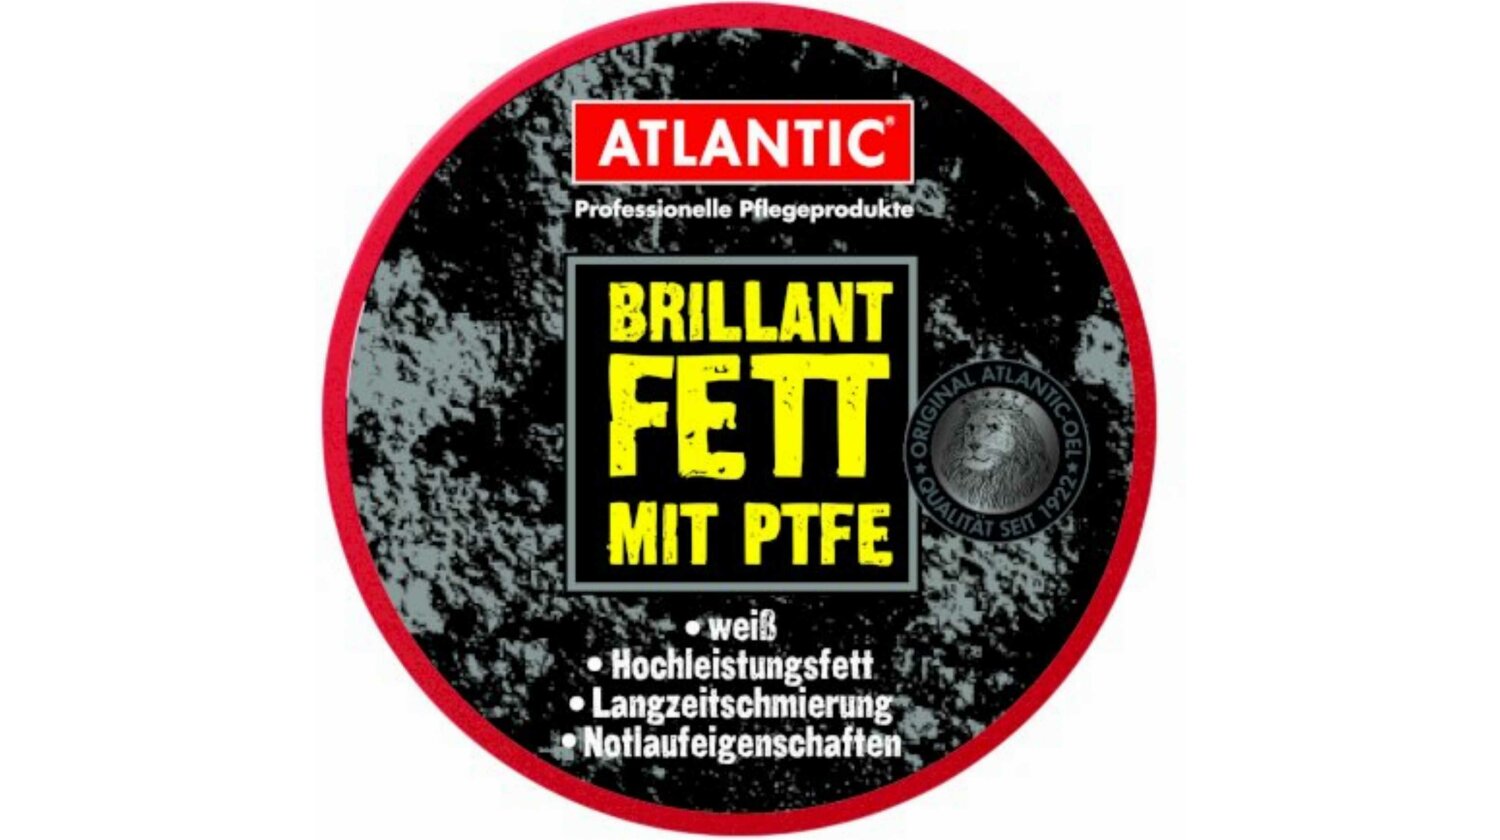 Atlantic Brillant-Fett Teflon 40 g